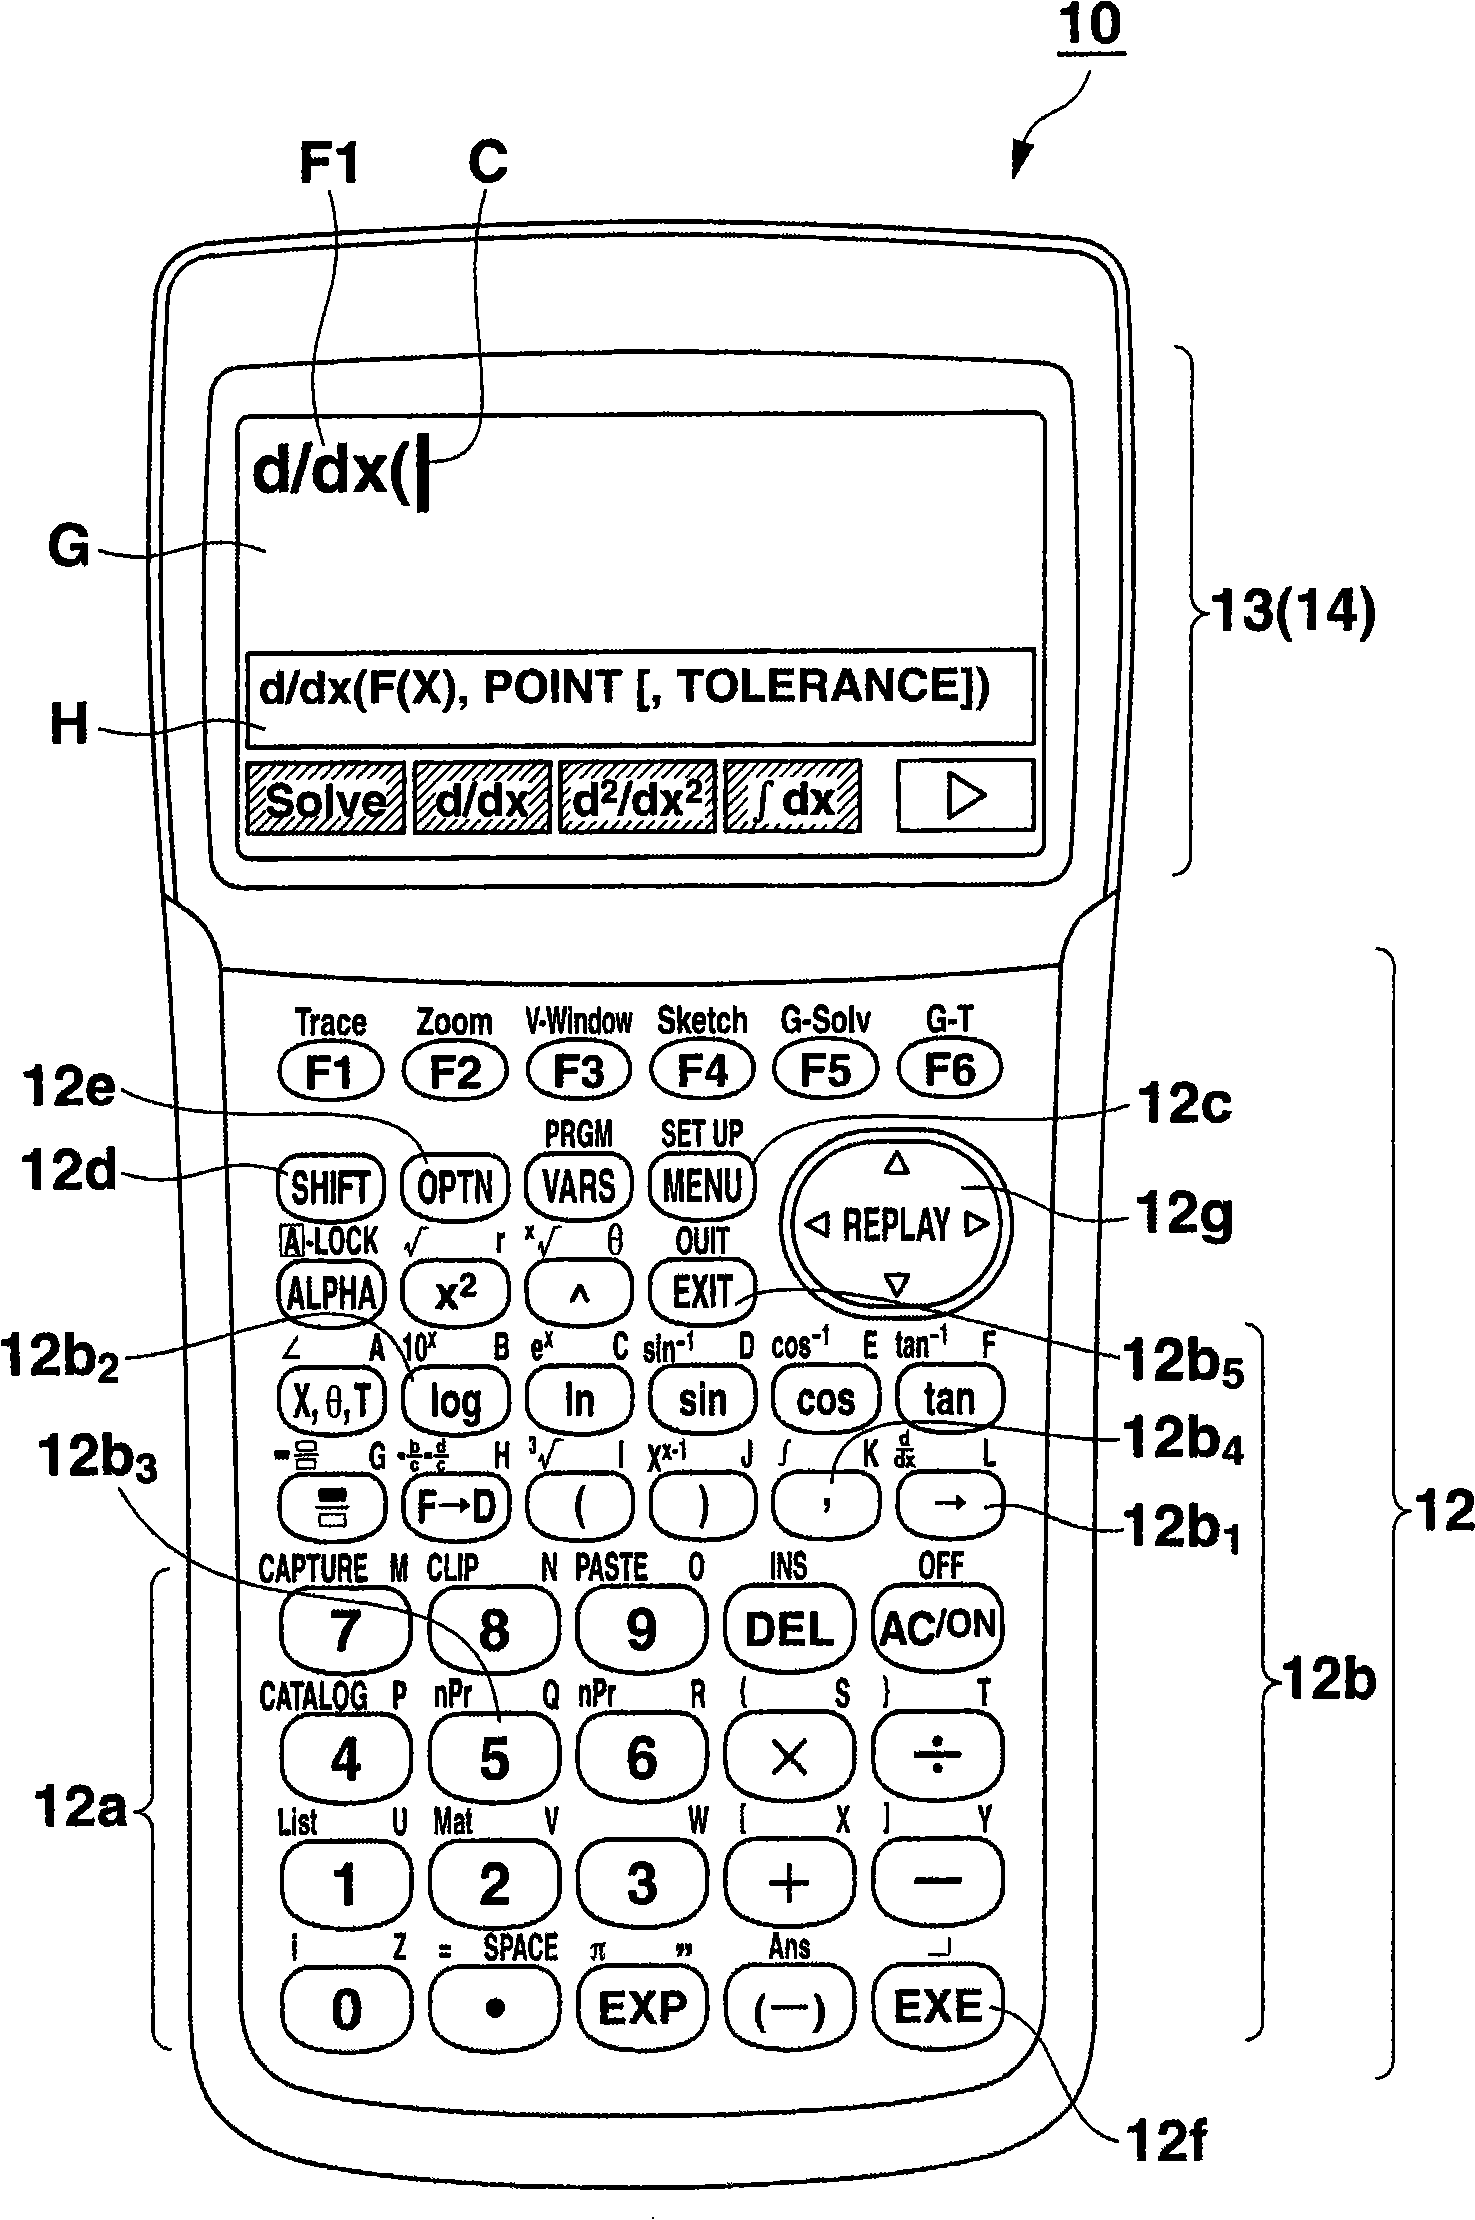 Function calculator having help display function